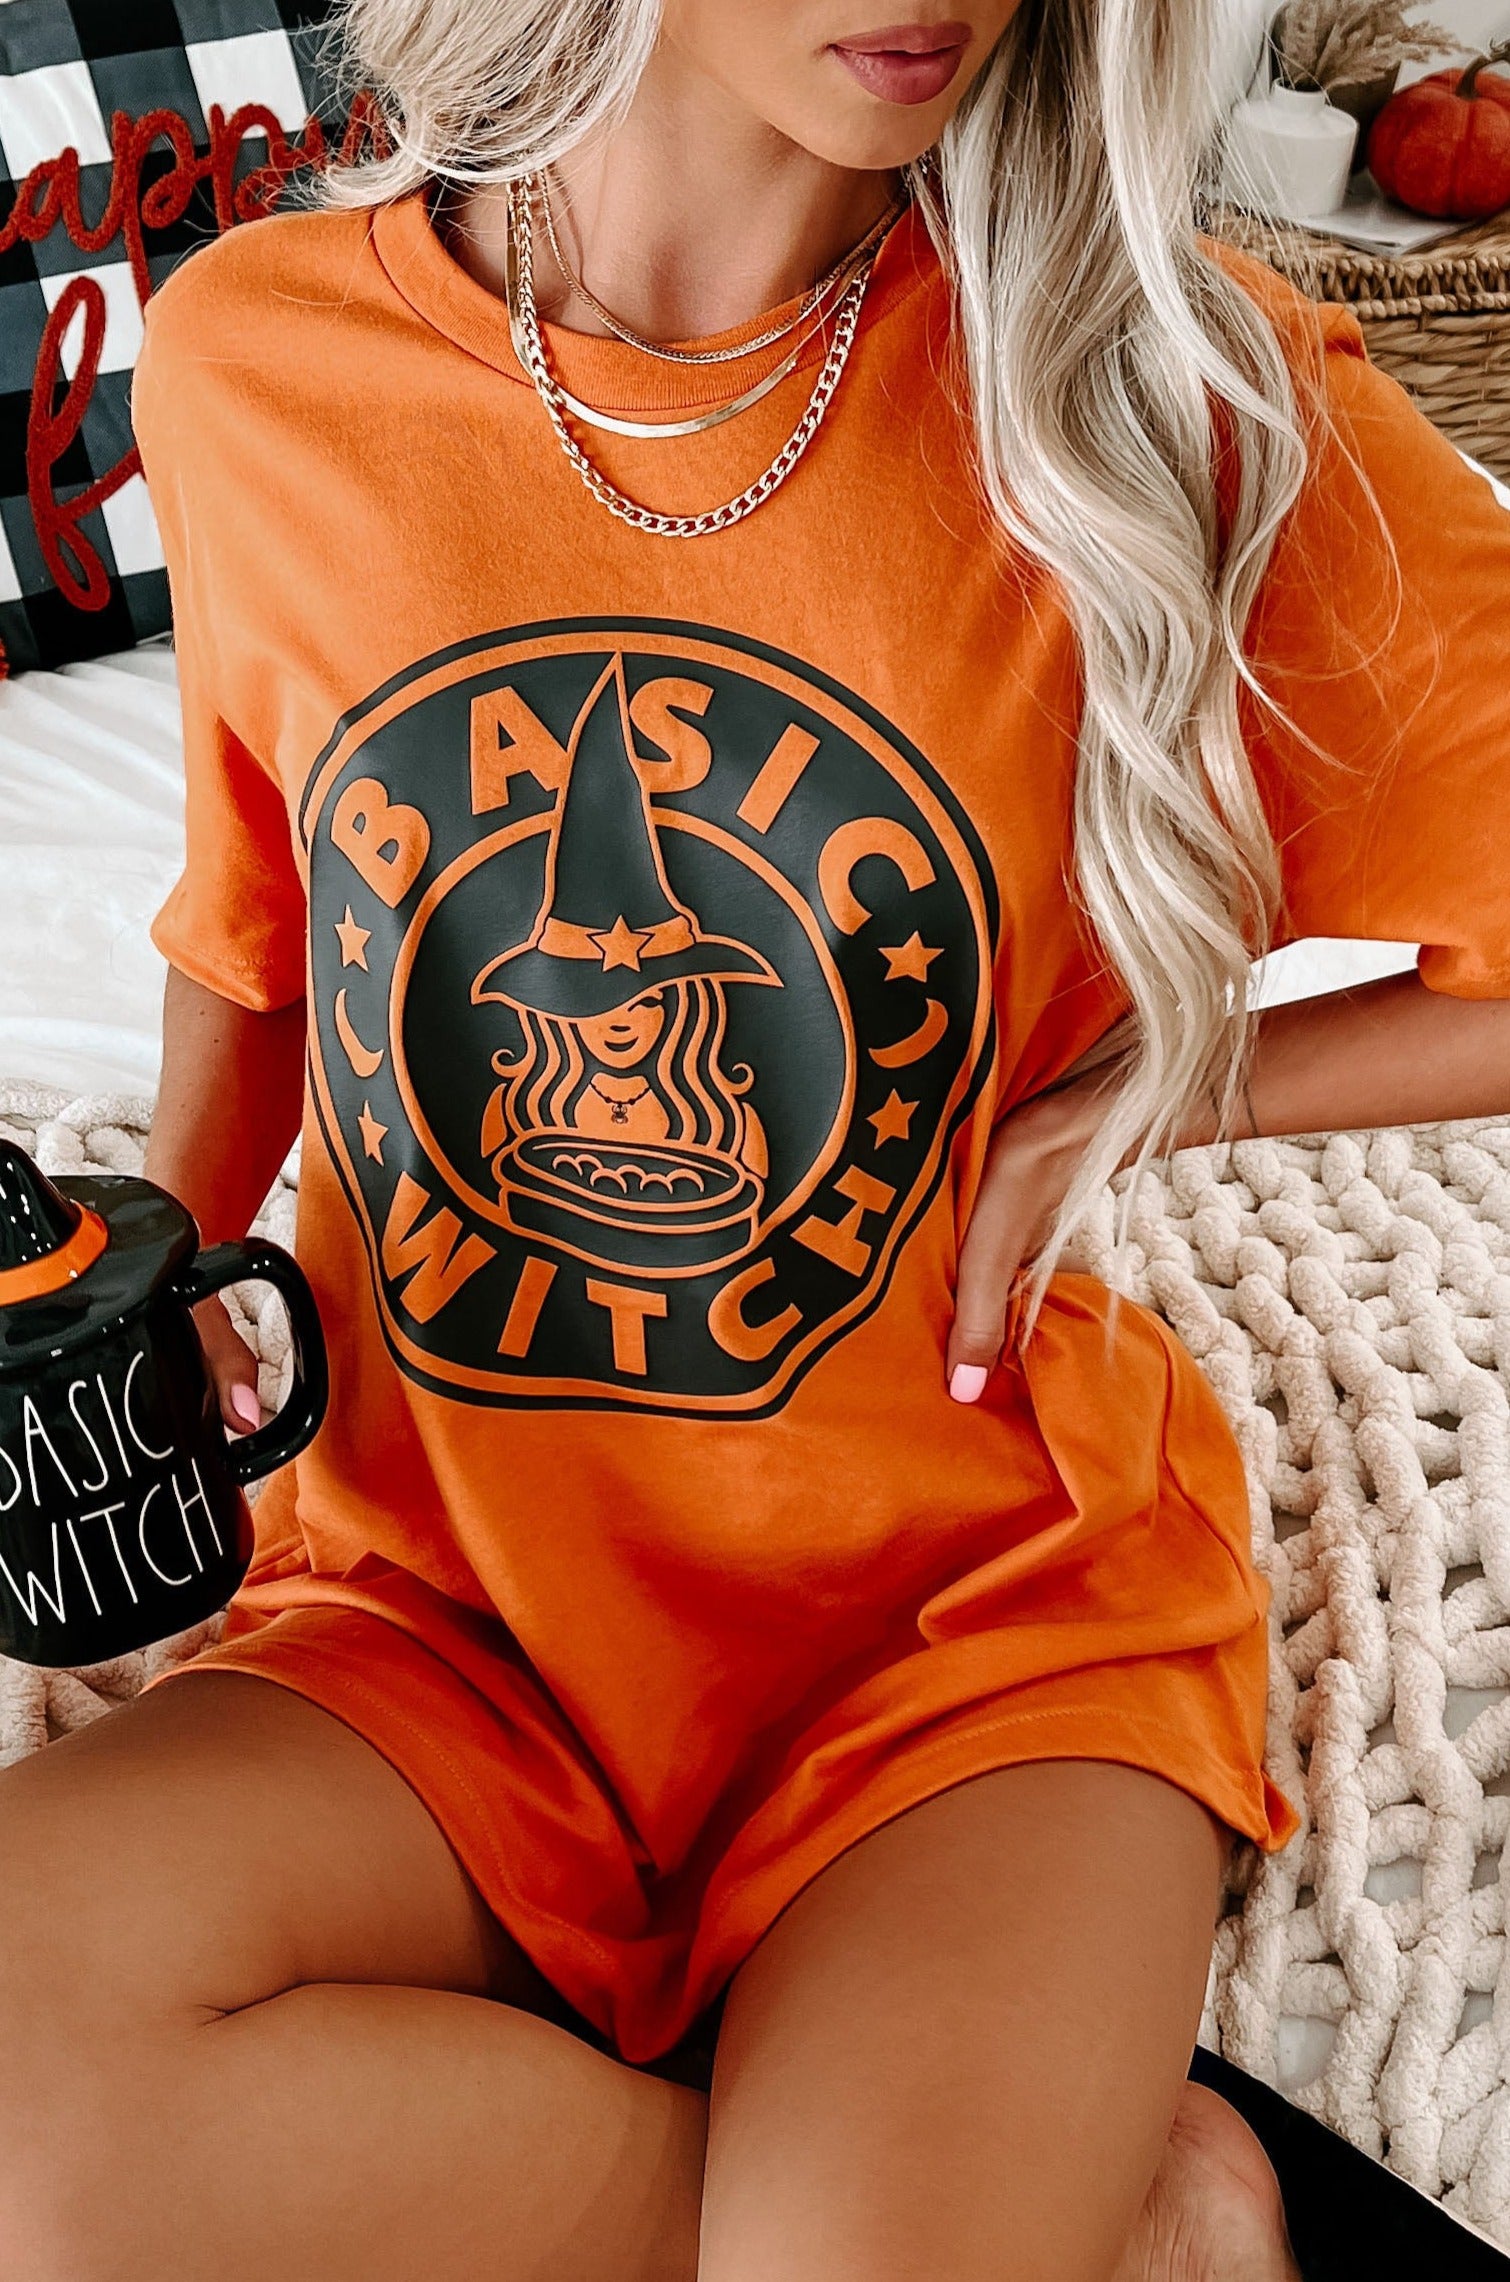 "Better Than Your Basic Witch" Graphic T-Shirt (Burnt Orange) - Print On Demand - NanaMacs